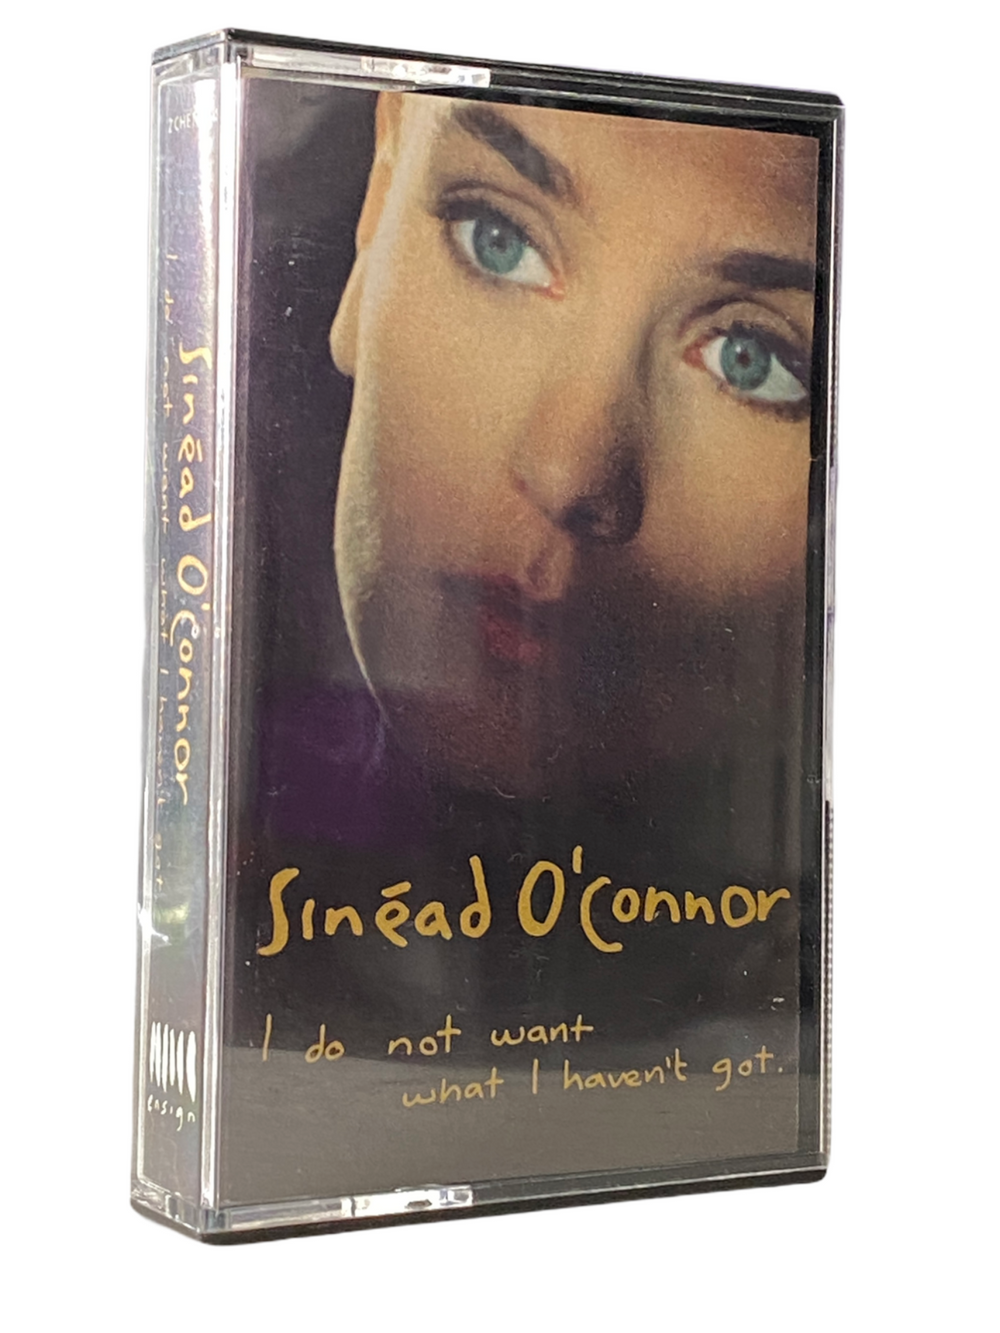 Prince – Sinead O'Conner I Do Not Want Cassette Album EU Preloved: 1990